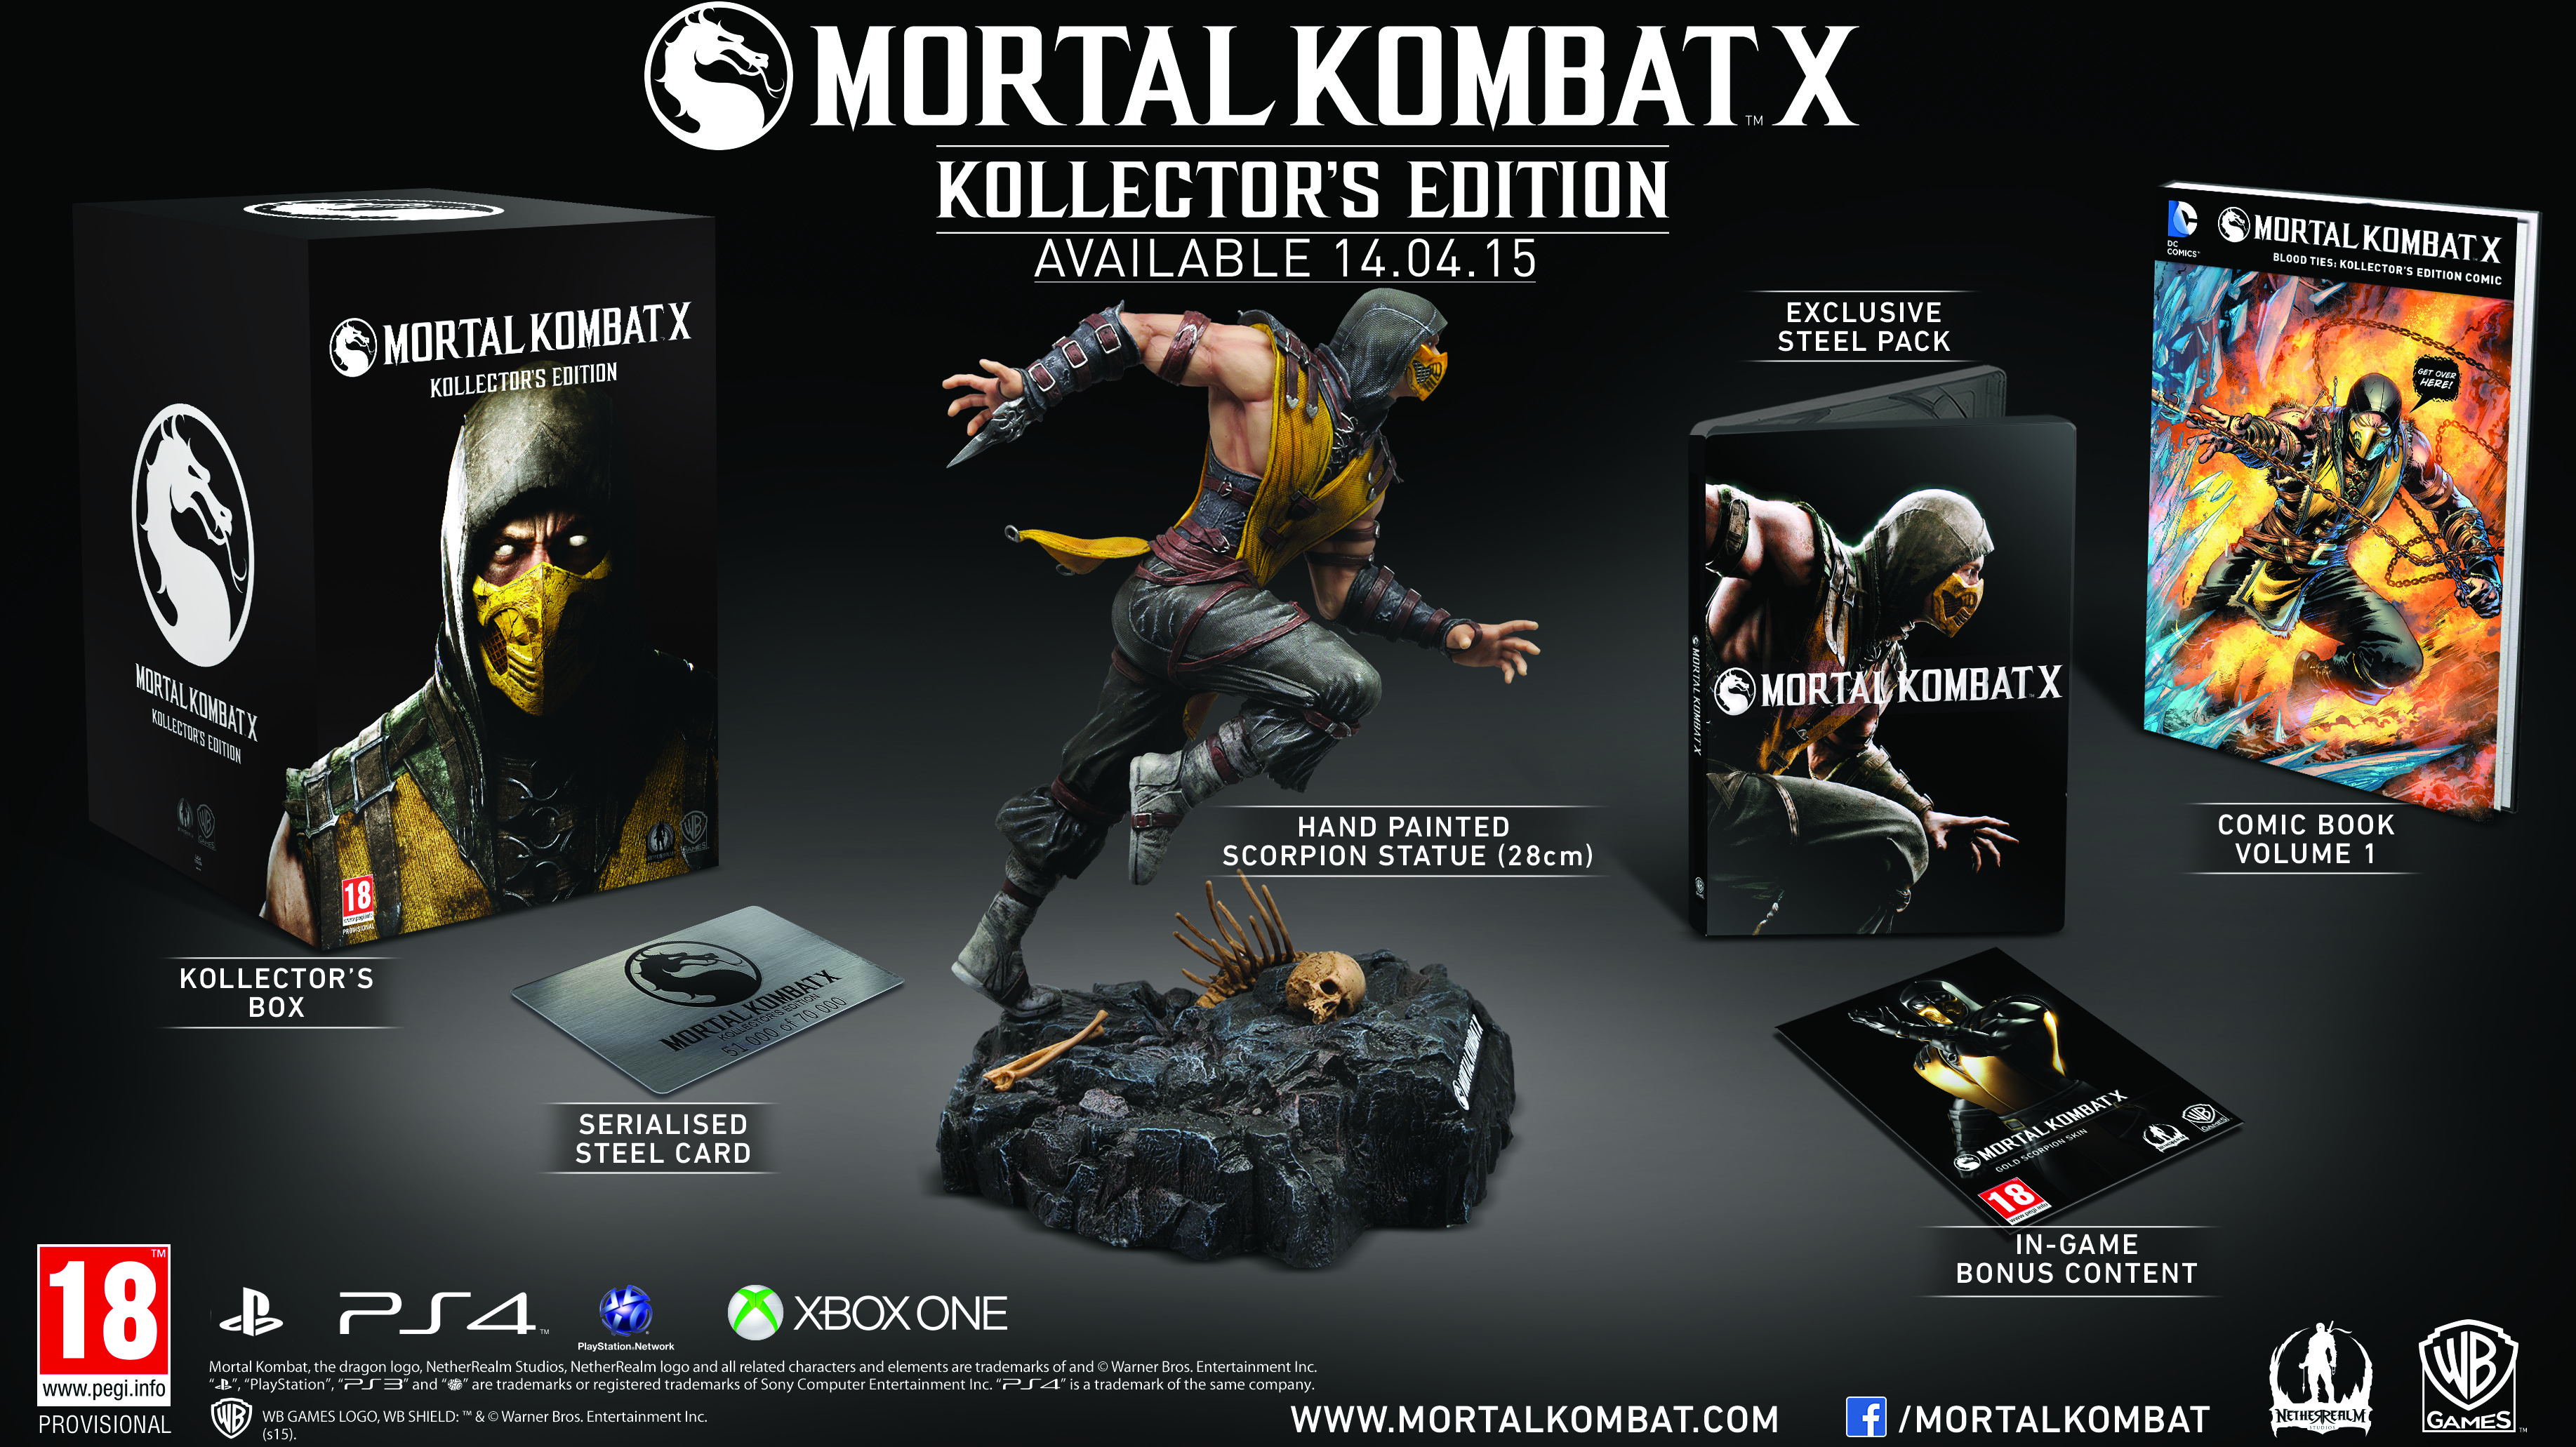 Mortal Kombat 1 Pre-Order Guide: Kollector's Edition, Bonuses, and More